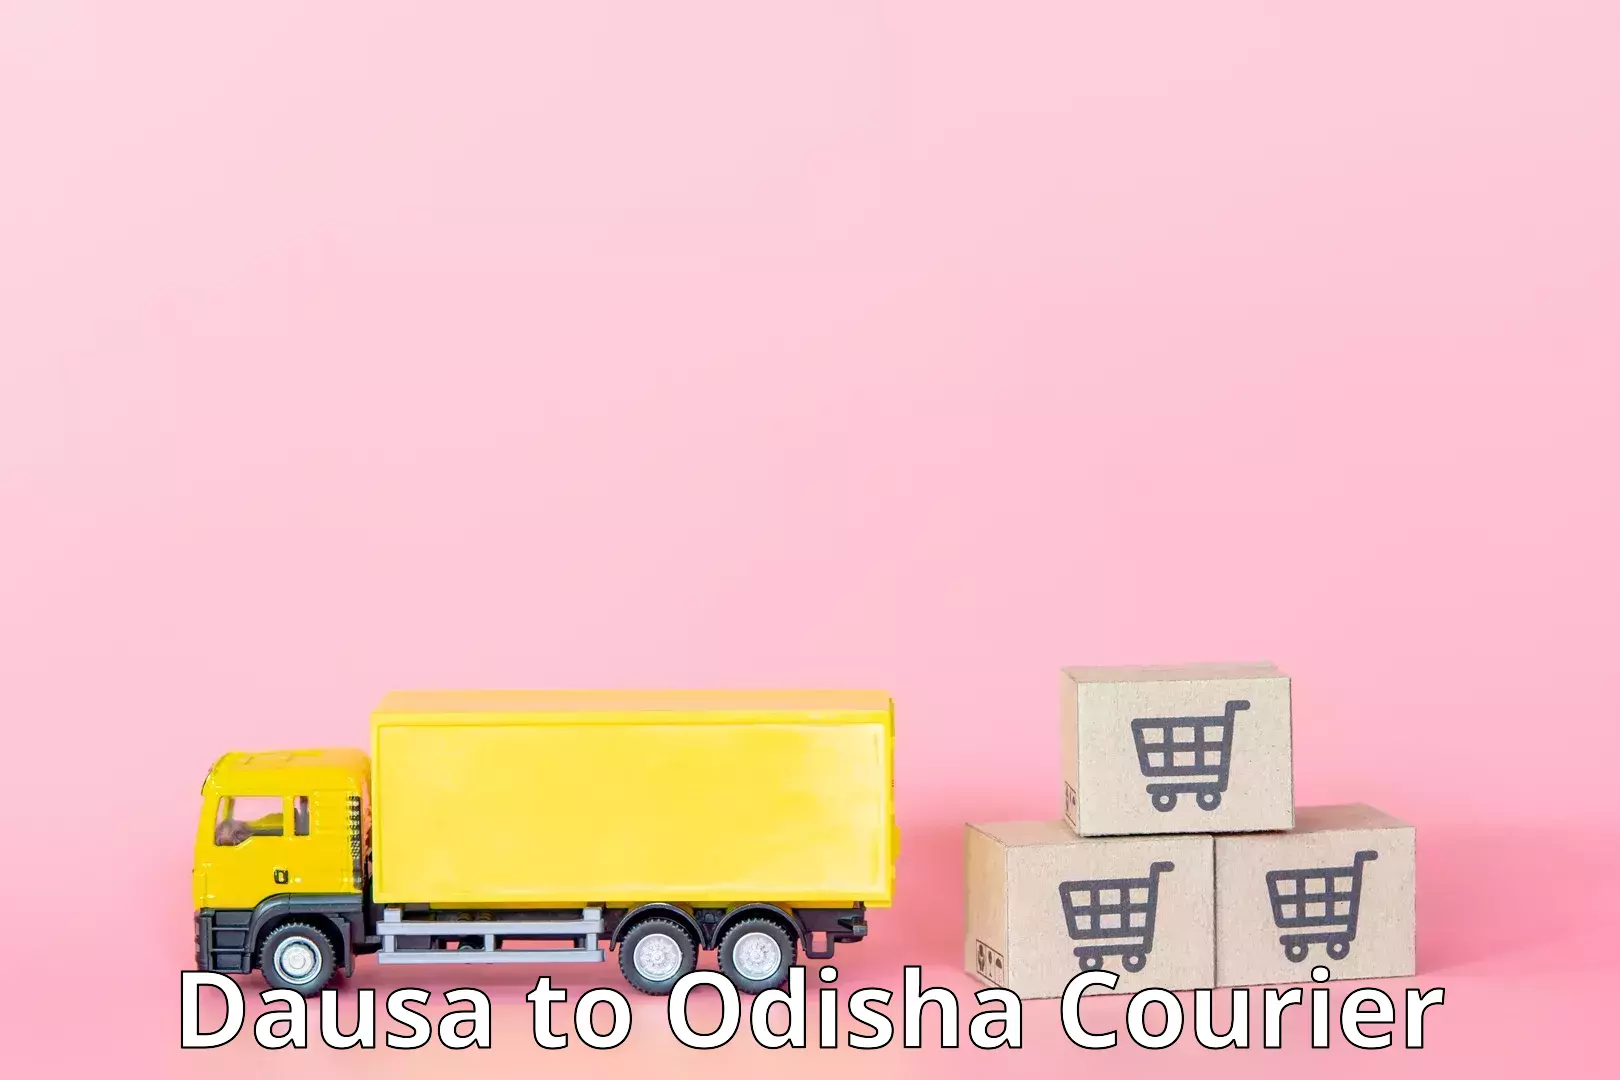 Customer-centric shipping Dausa to Bhuban